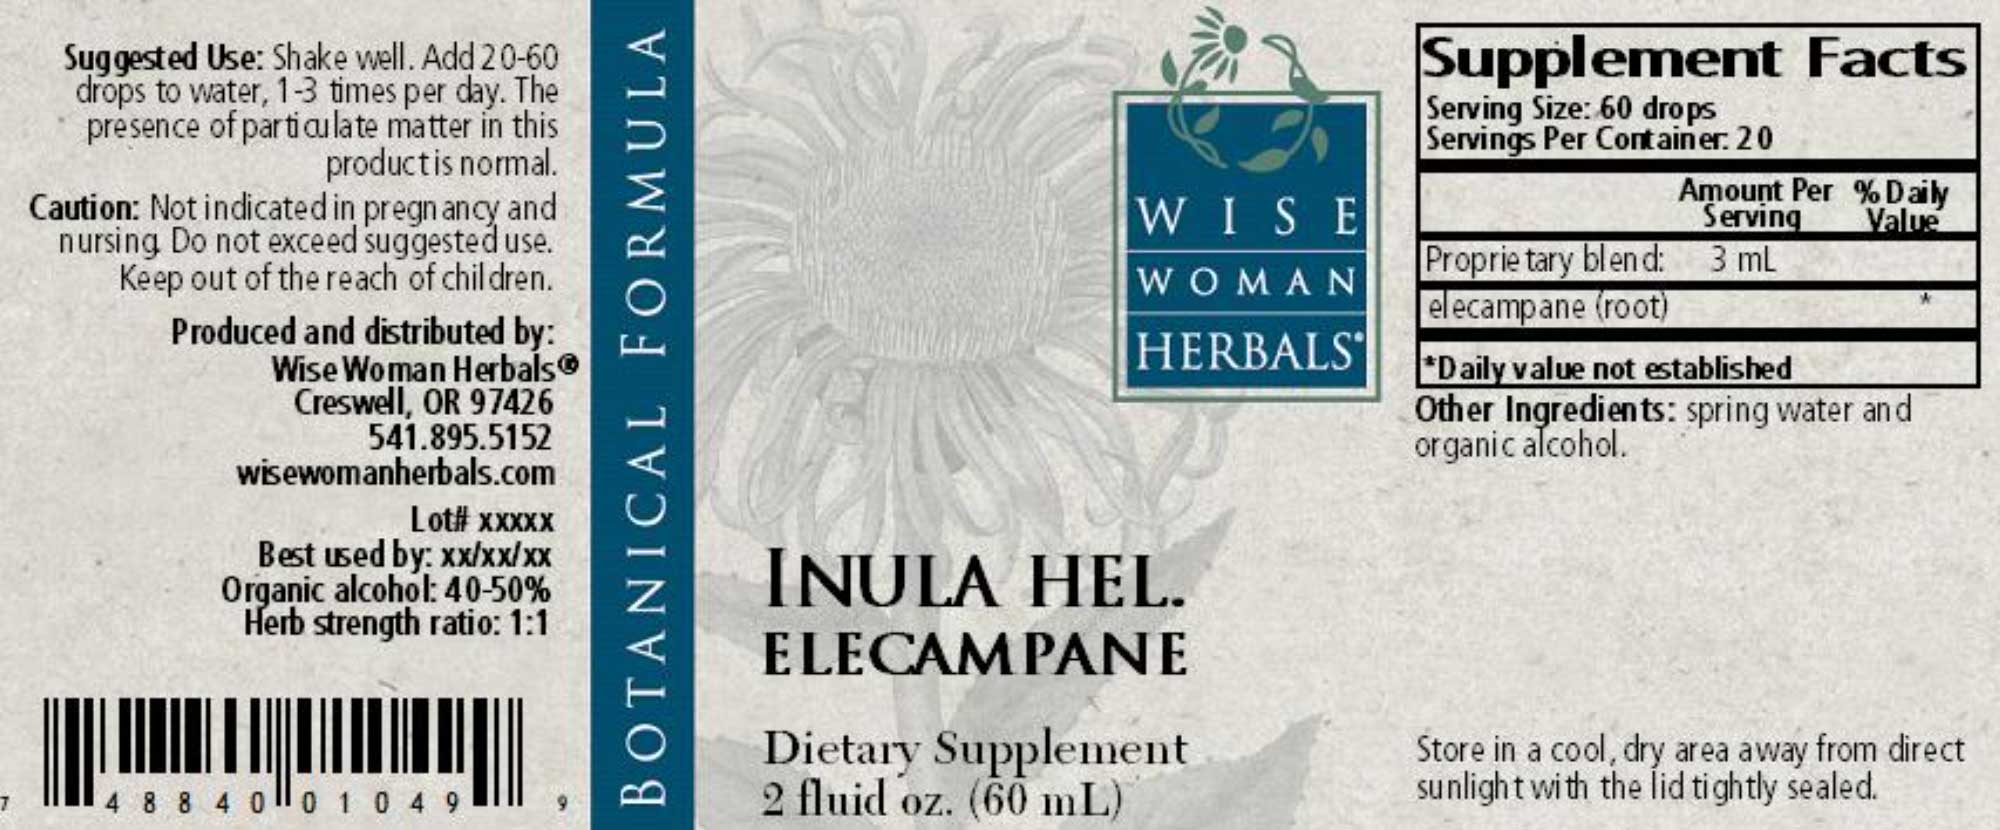 Wise Woman Herbals Inula Helenium Elecampane Label